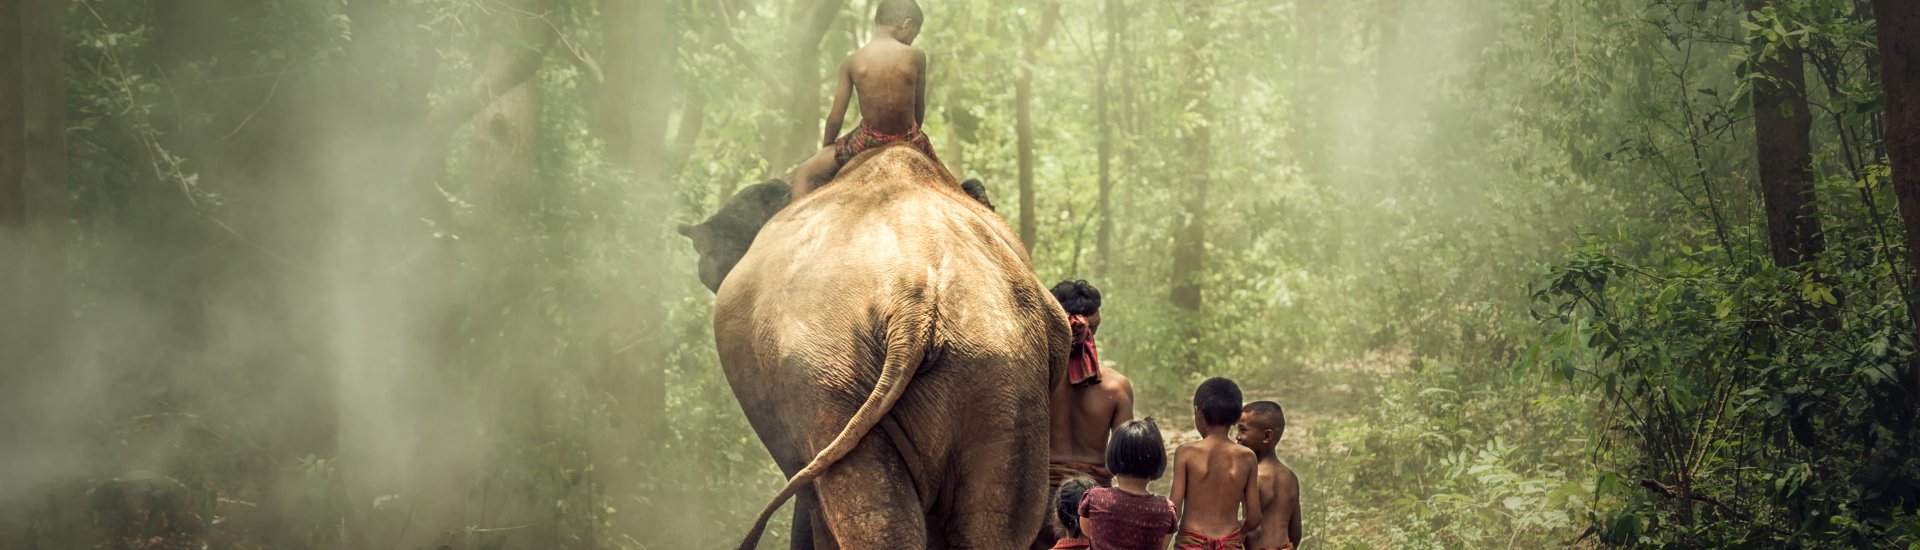 elephant-cambodia